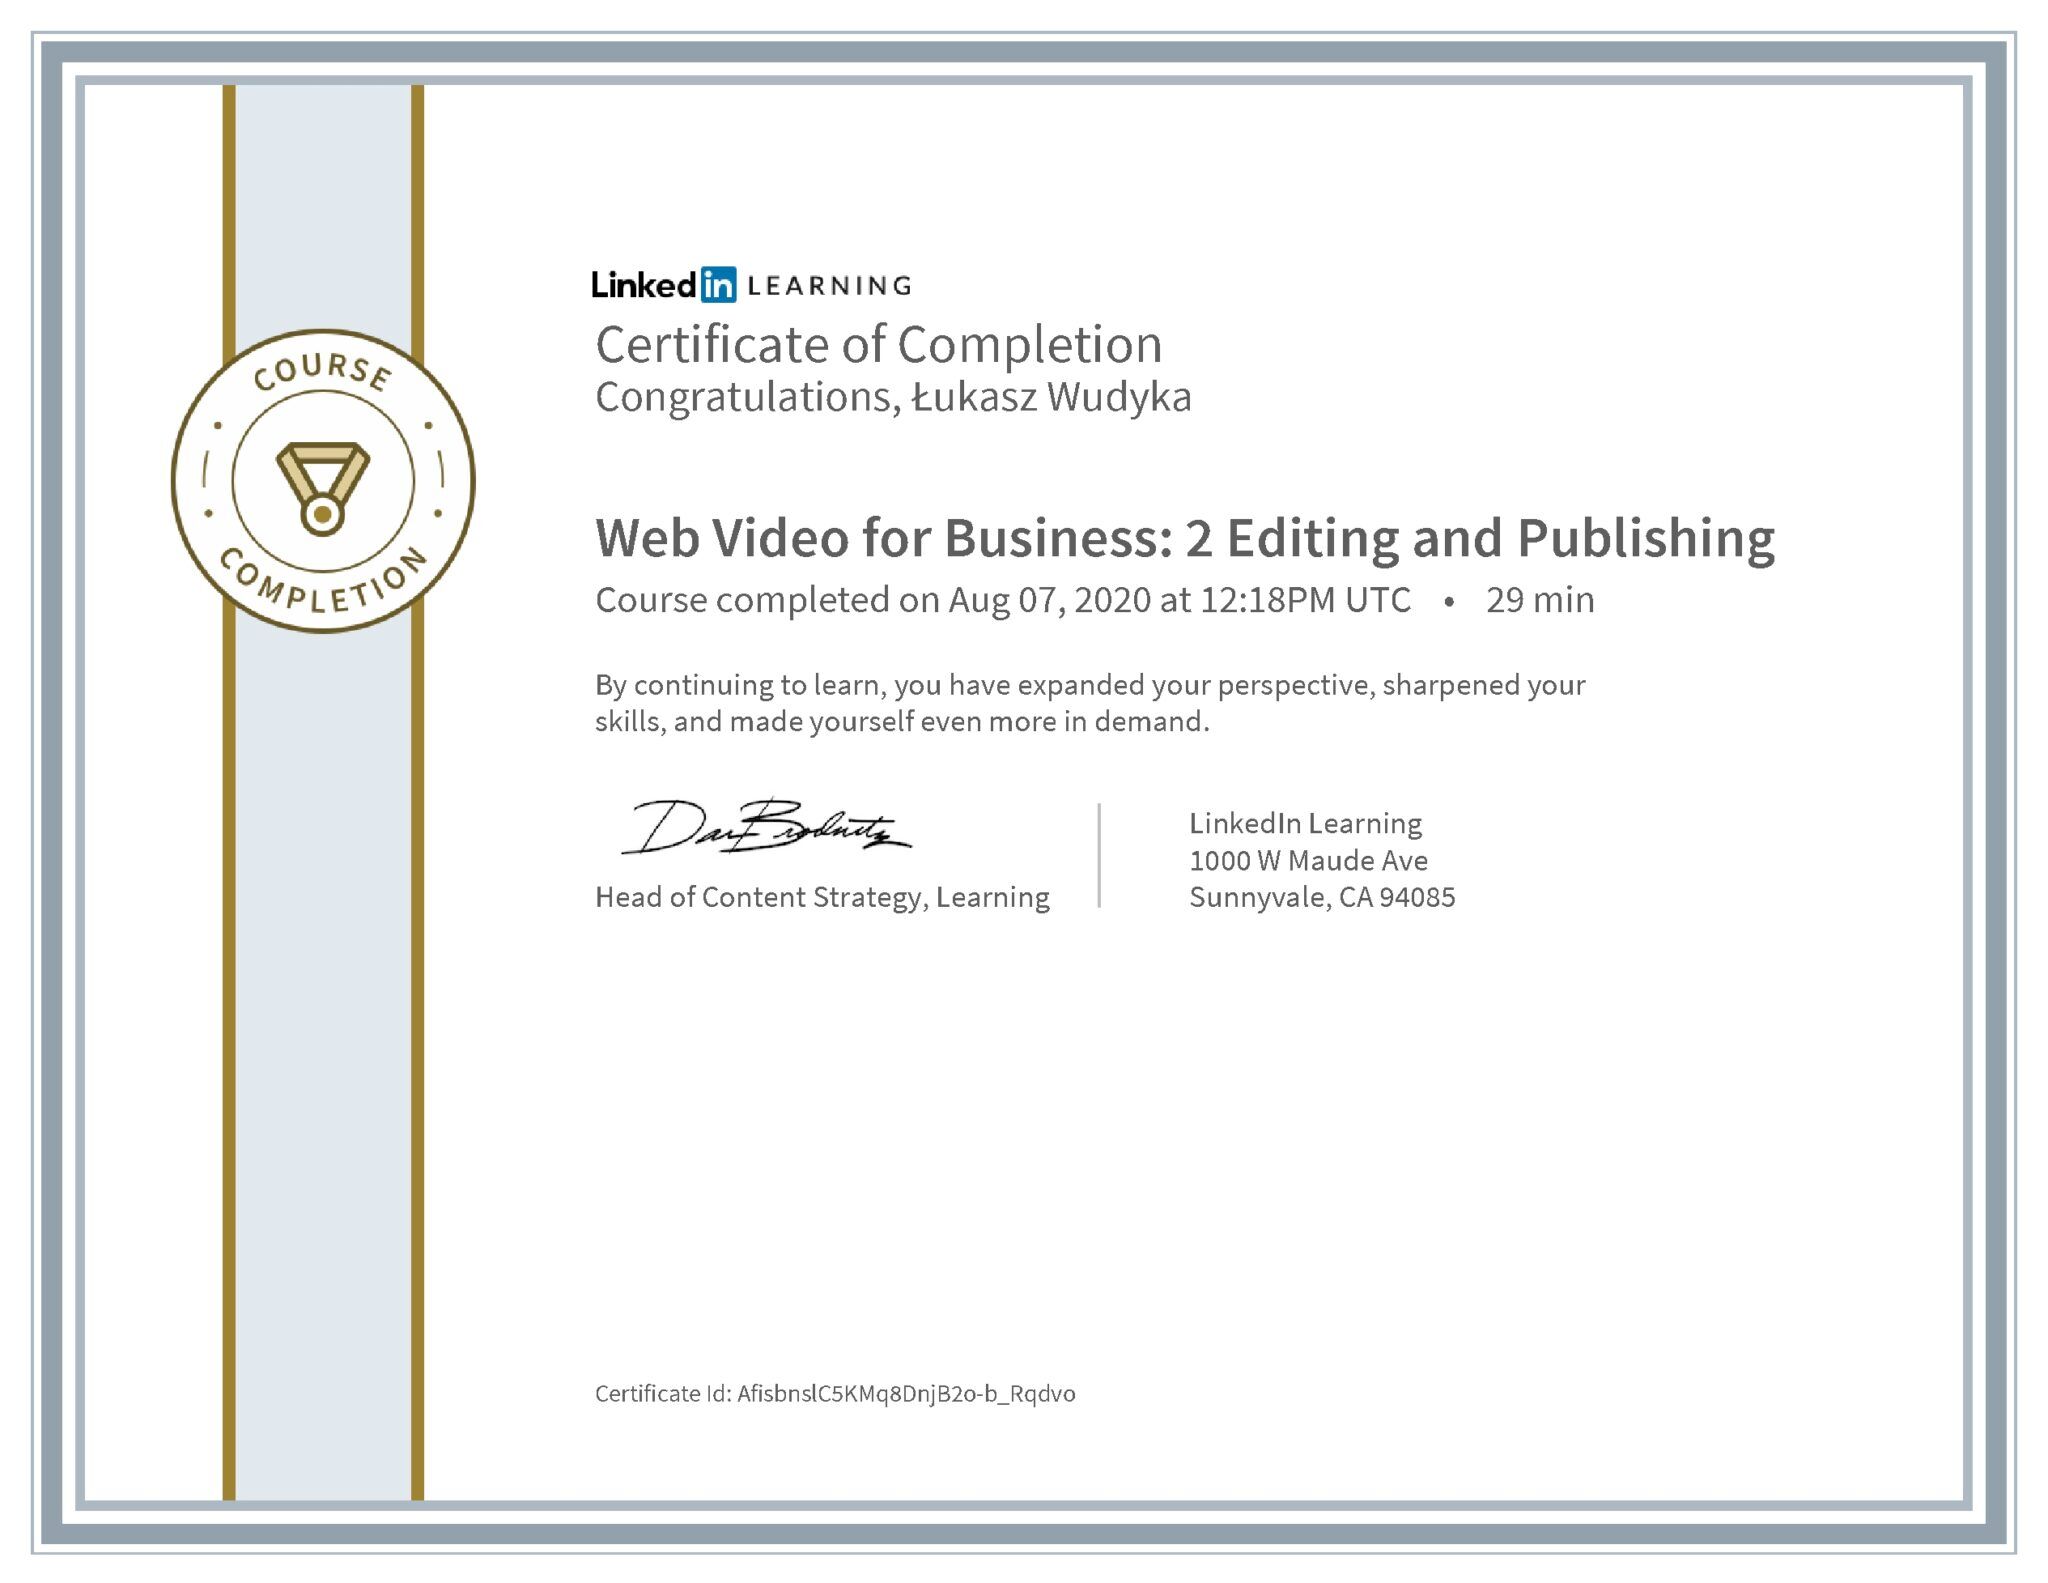 Łukasz Wudyka certyfikat LinkedIn Web Video for Business: 2 Editing and Publishing